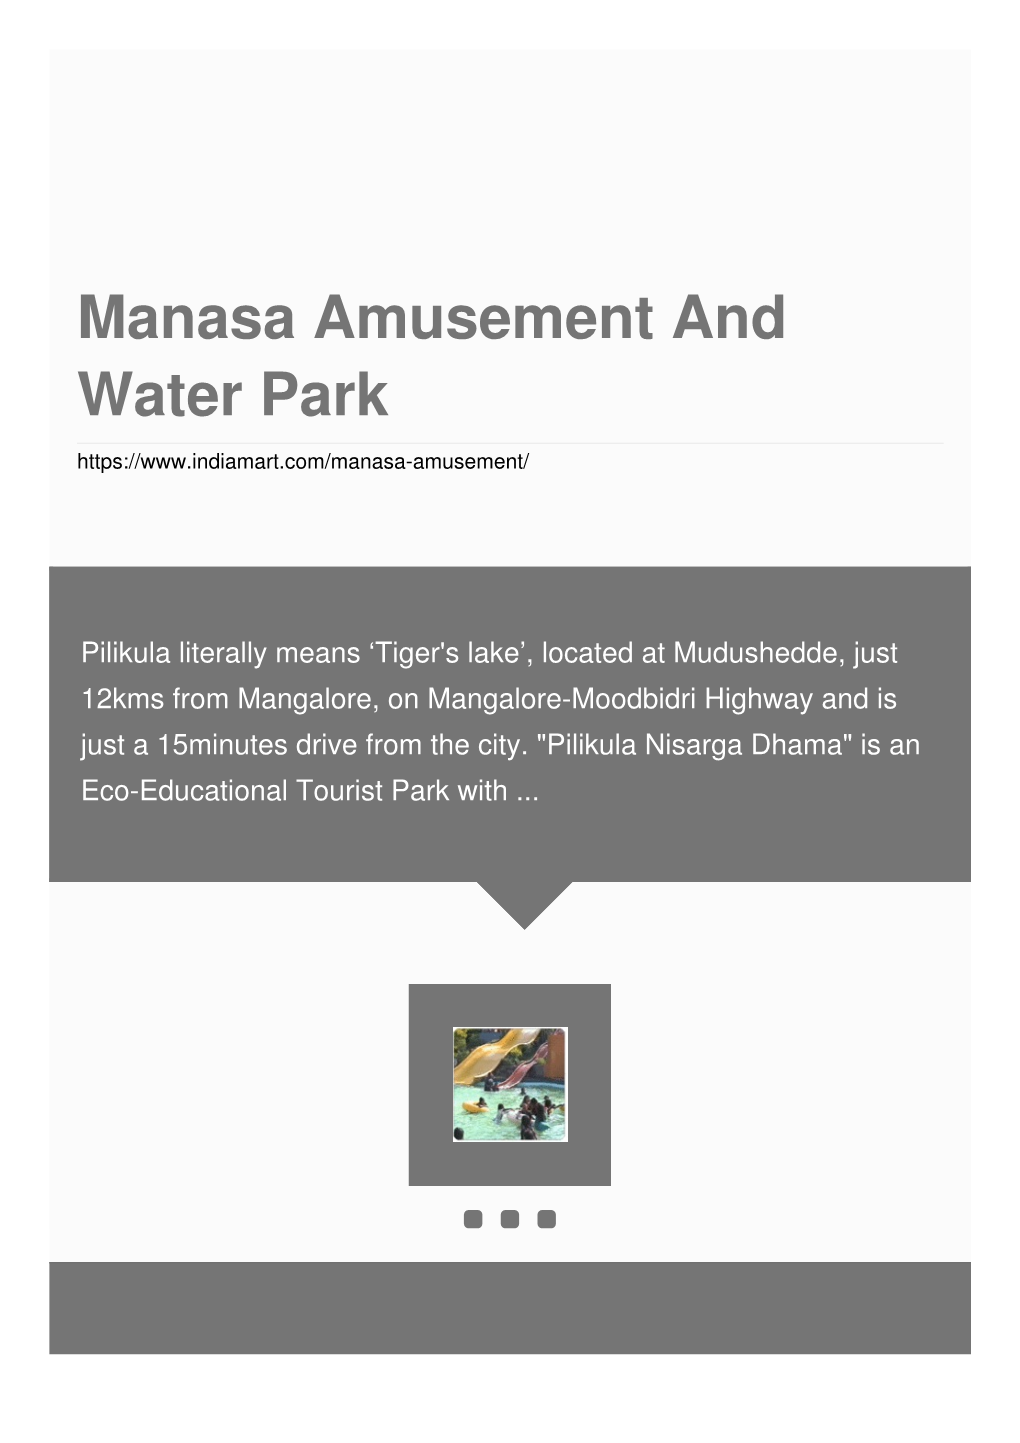 Manasa Amusement and Water Park